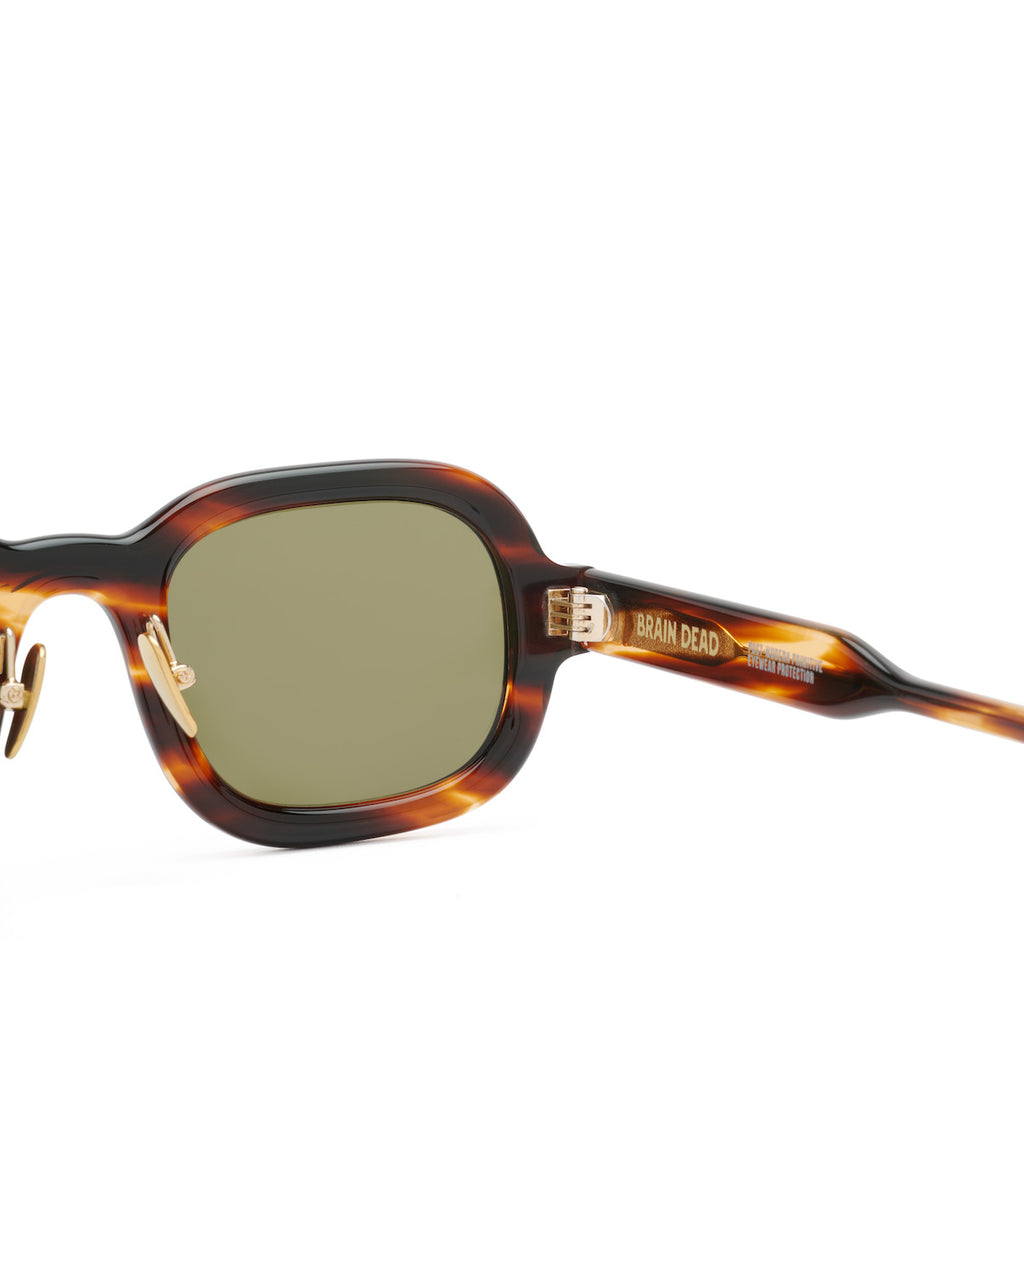 Newman Post Modern Primitive Eye Protection Sunglasses - Havana/Green 3